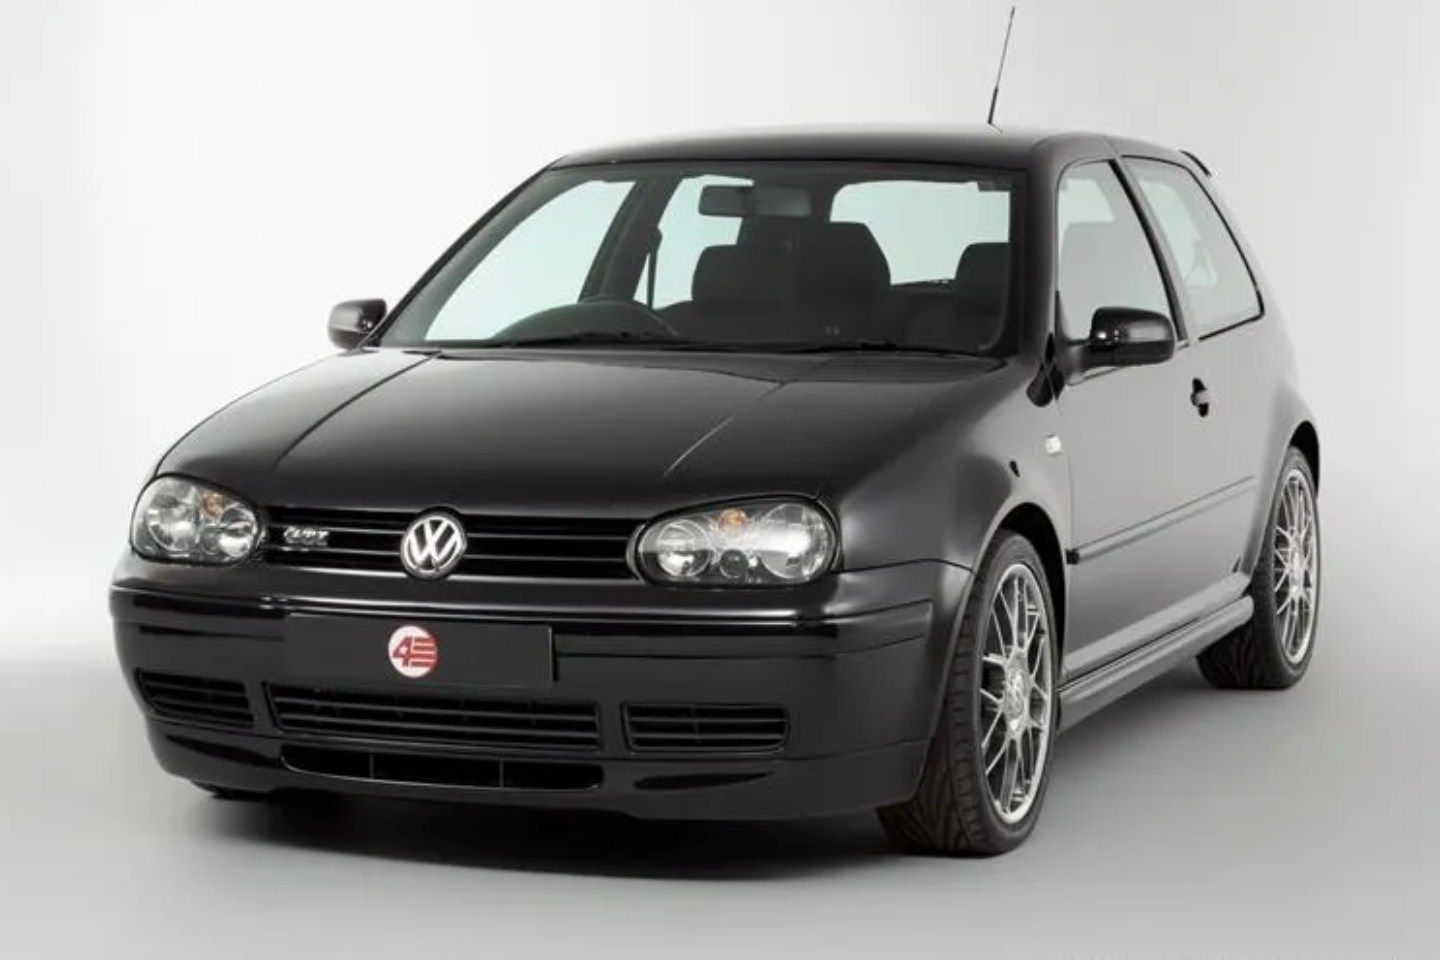 Volkswagen Golf V GTI [UK] (2004) - pictures, information & specs